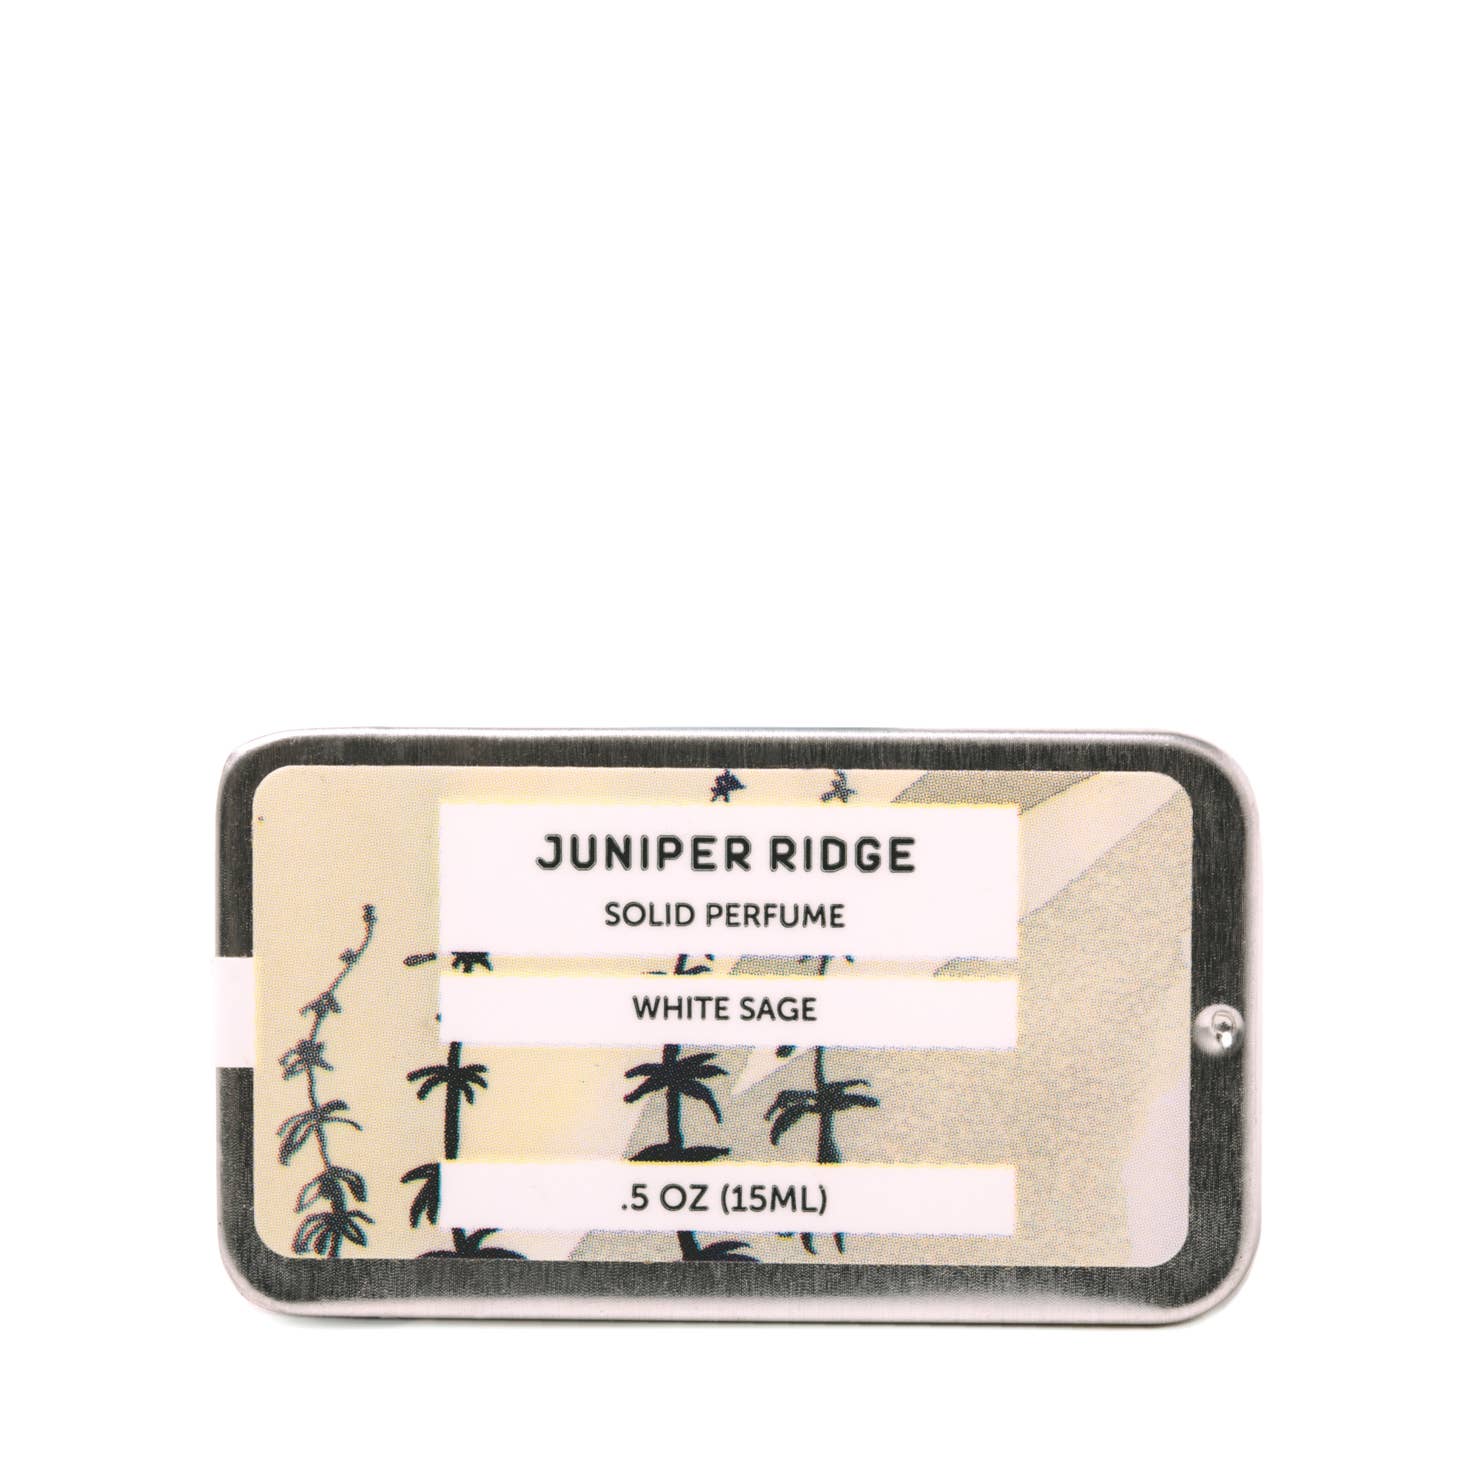 Solid Perfume White Sage by Juniper Ridge